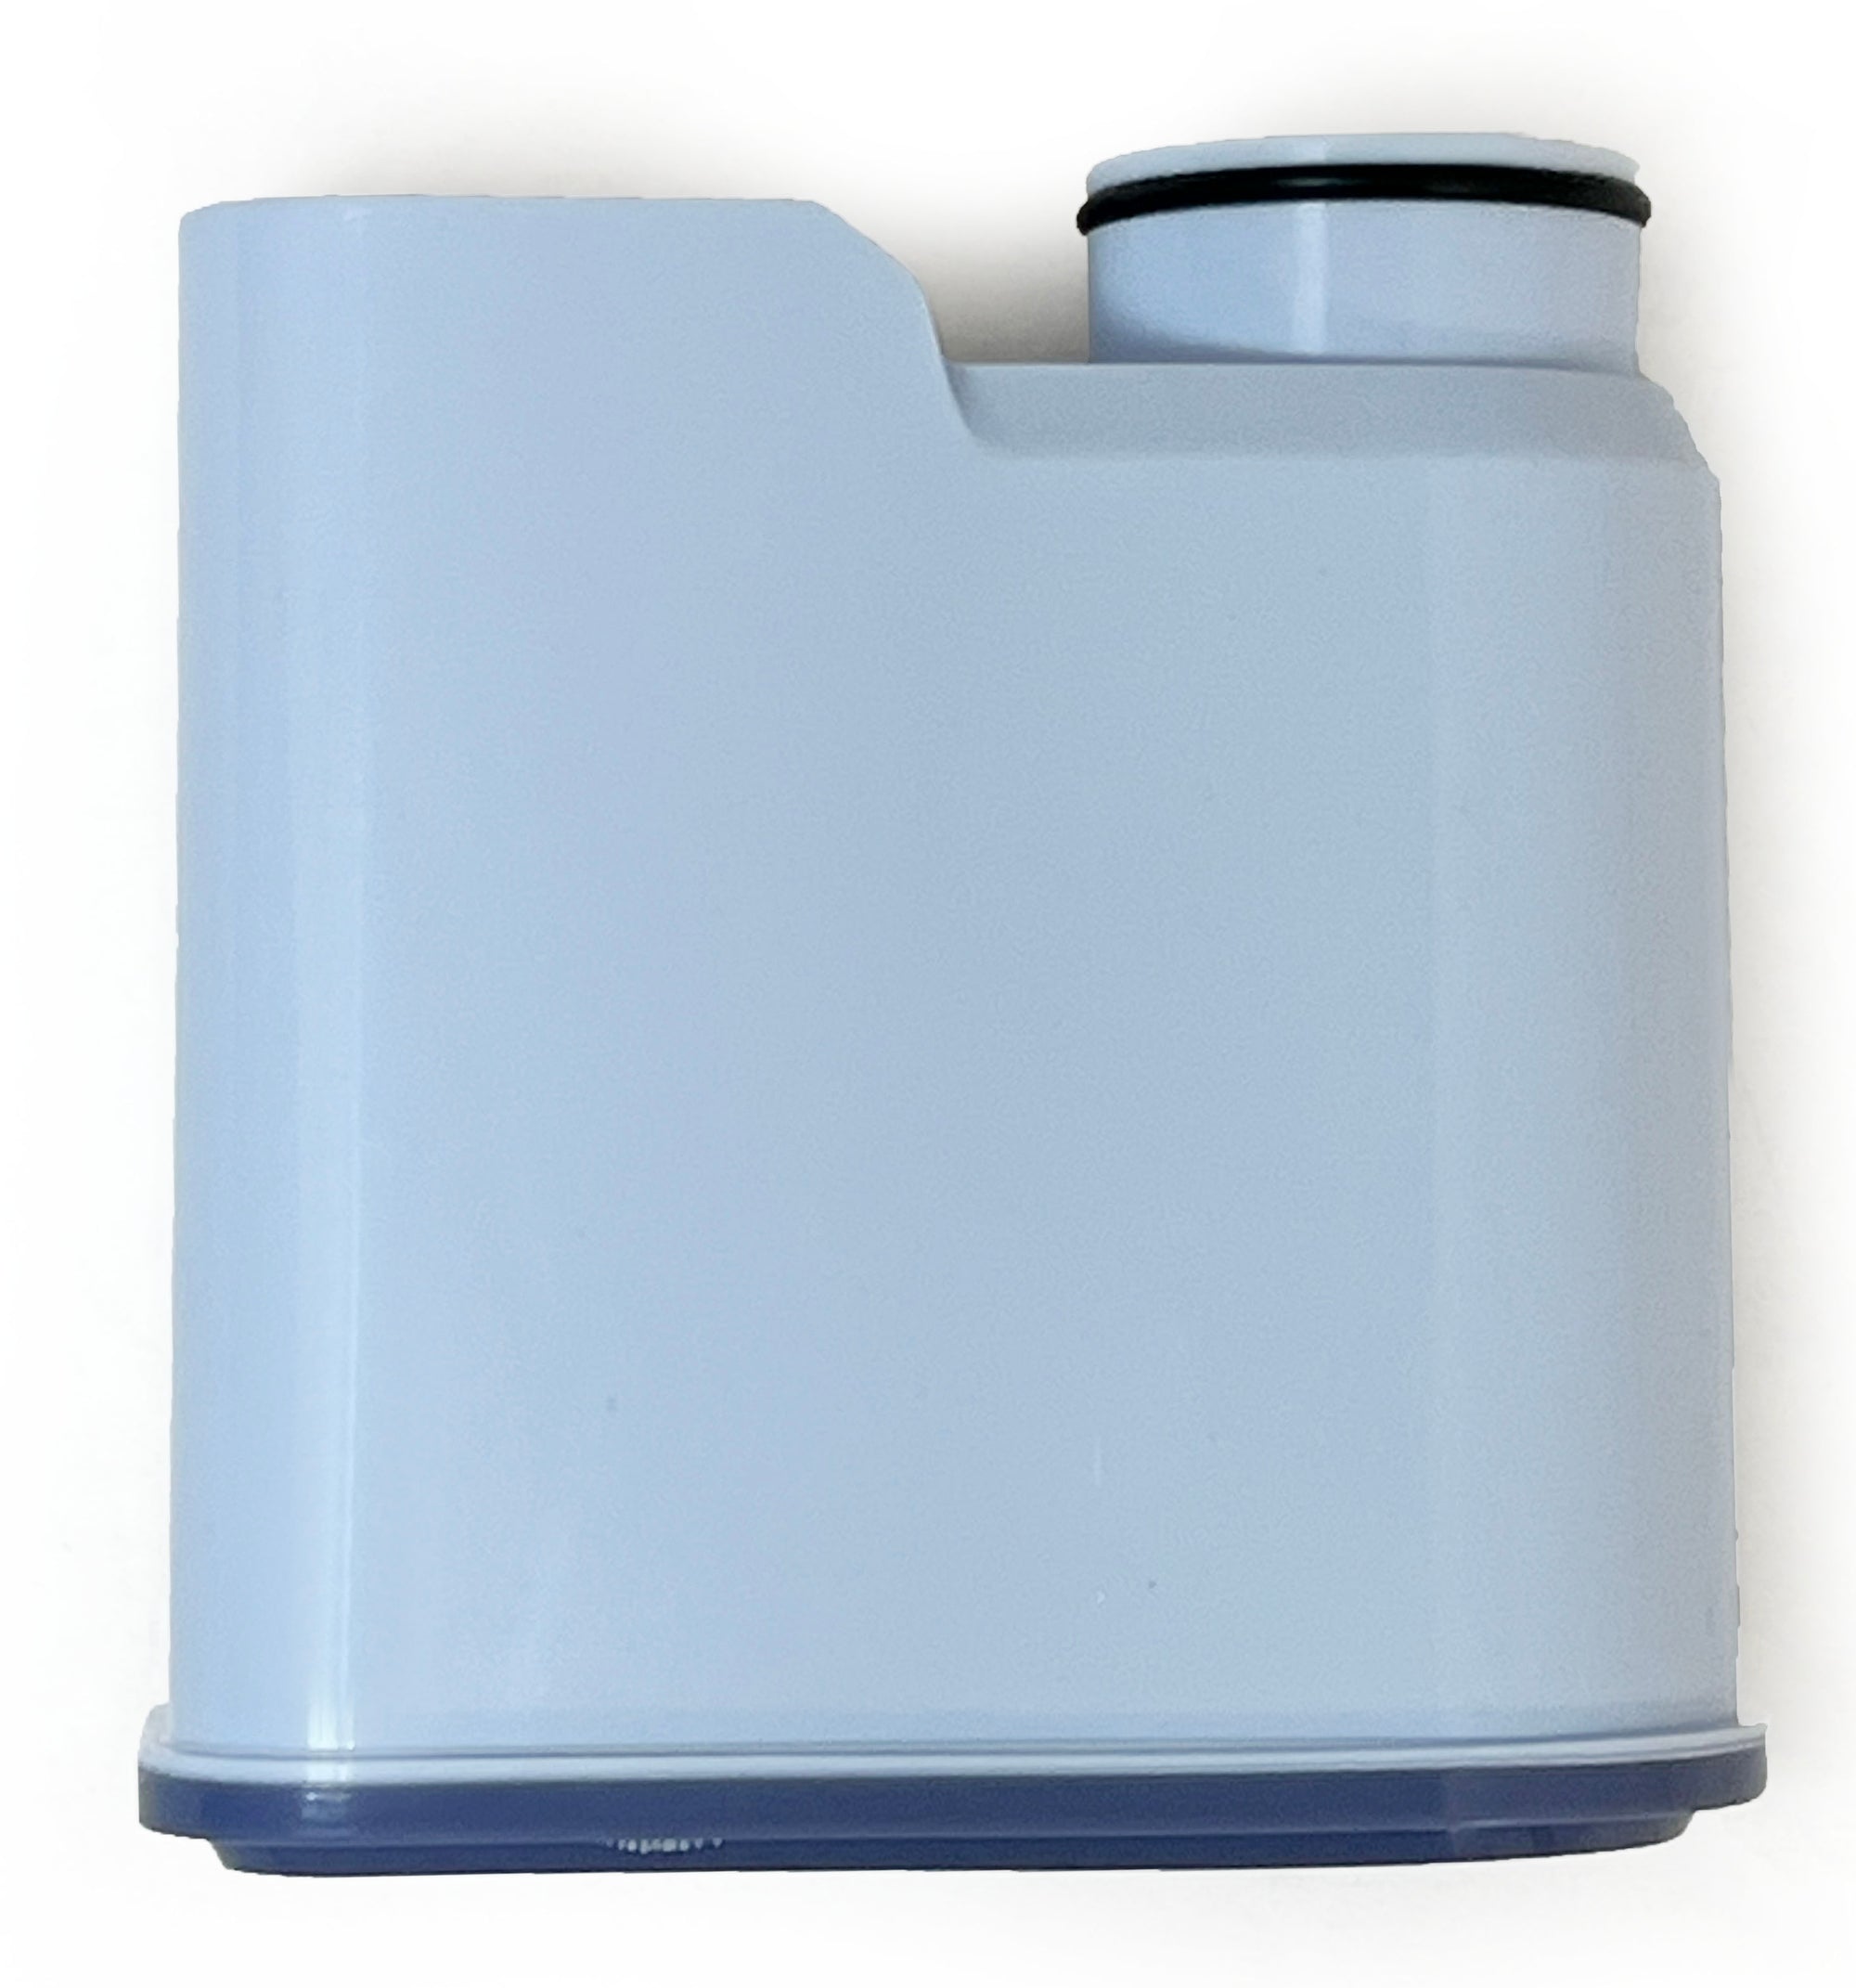 Vattenfilter Philips AquaClean CA6903/10 1 st